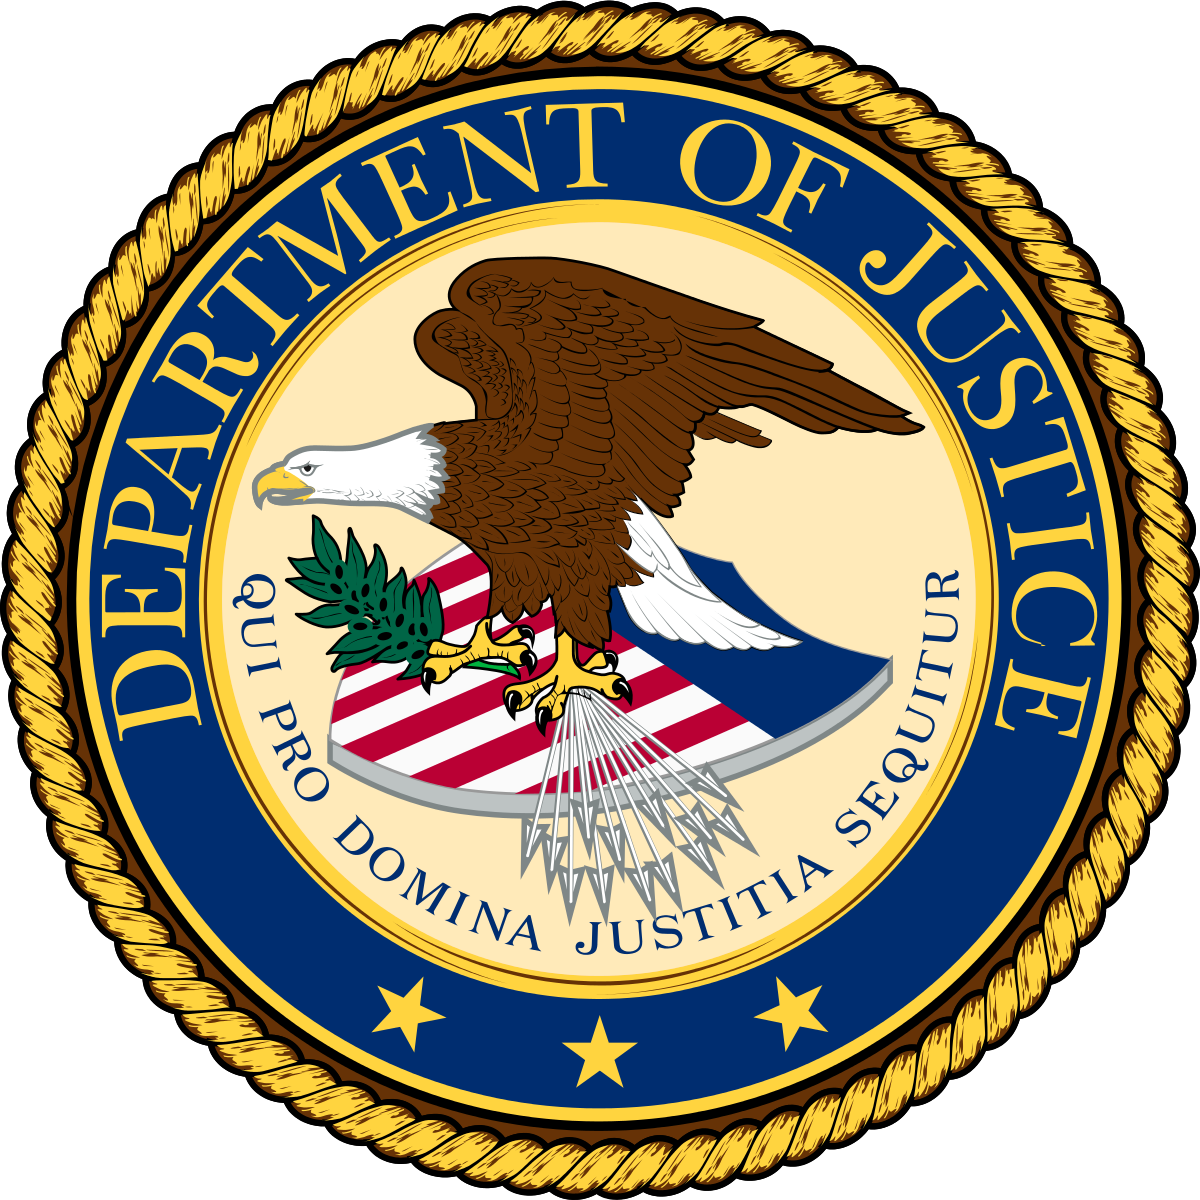 United States Attorney - Wikipedia